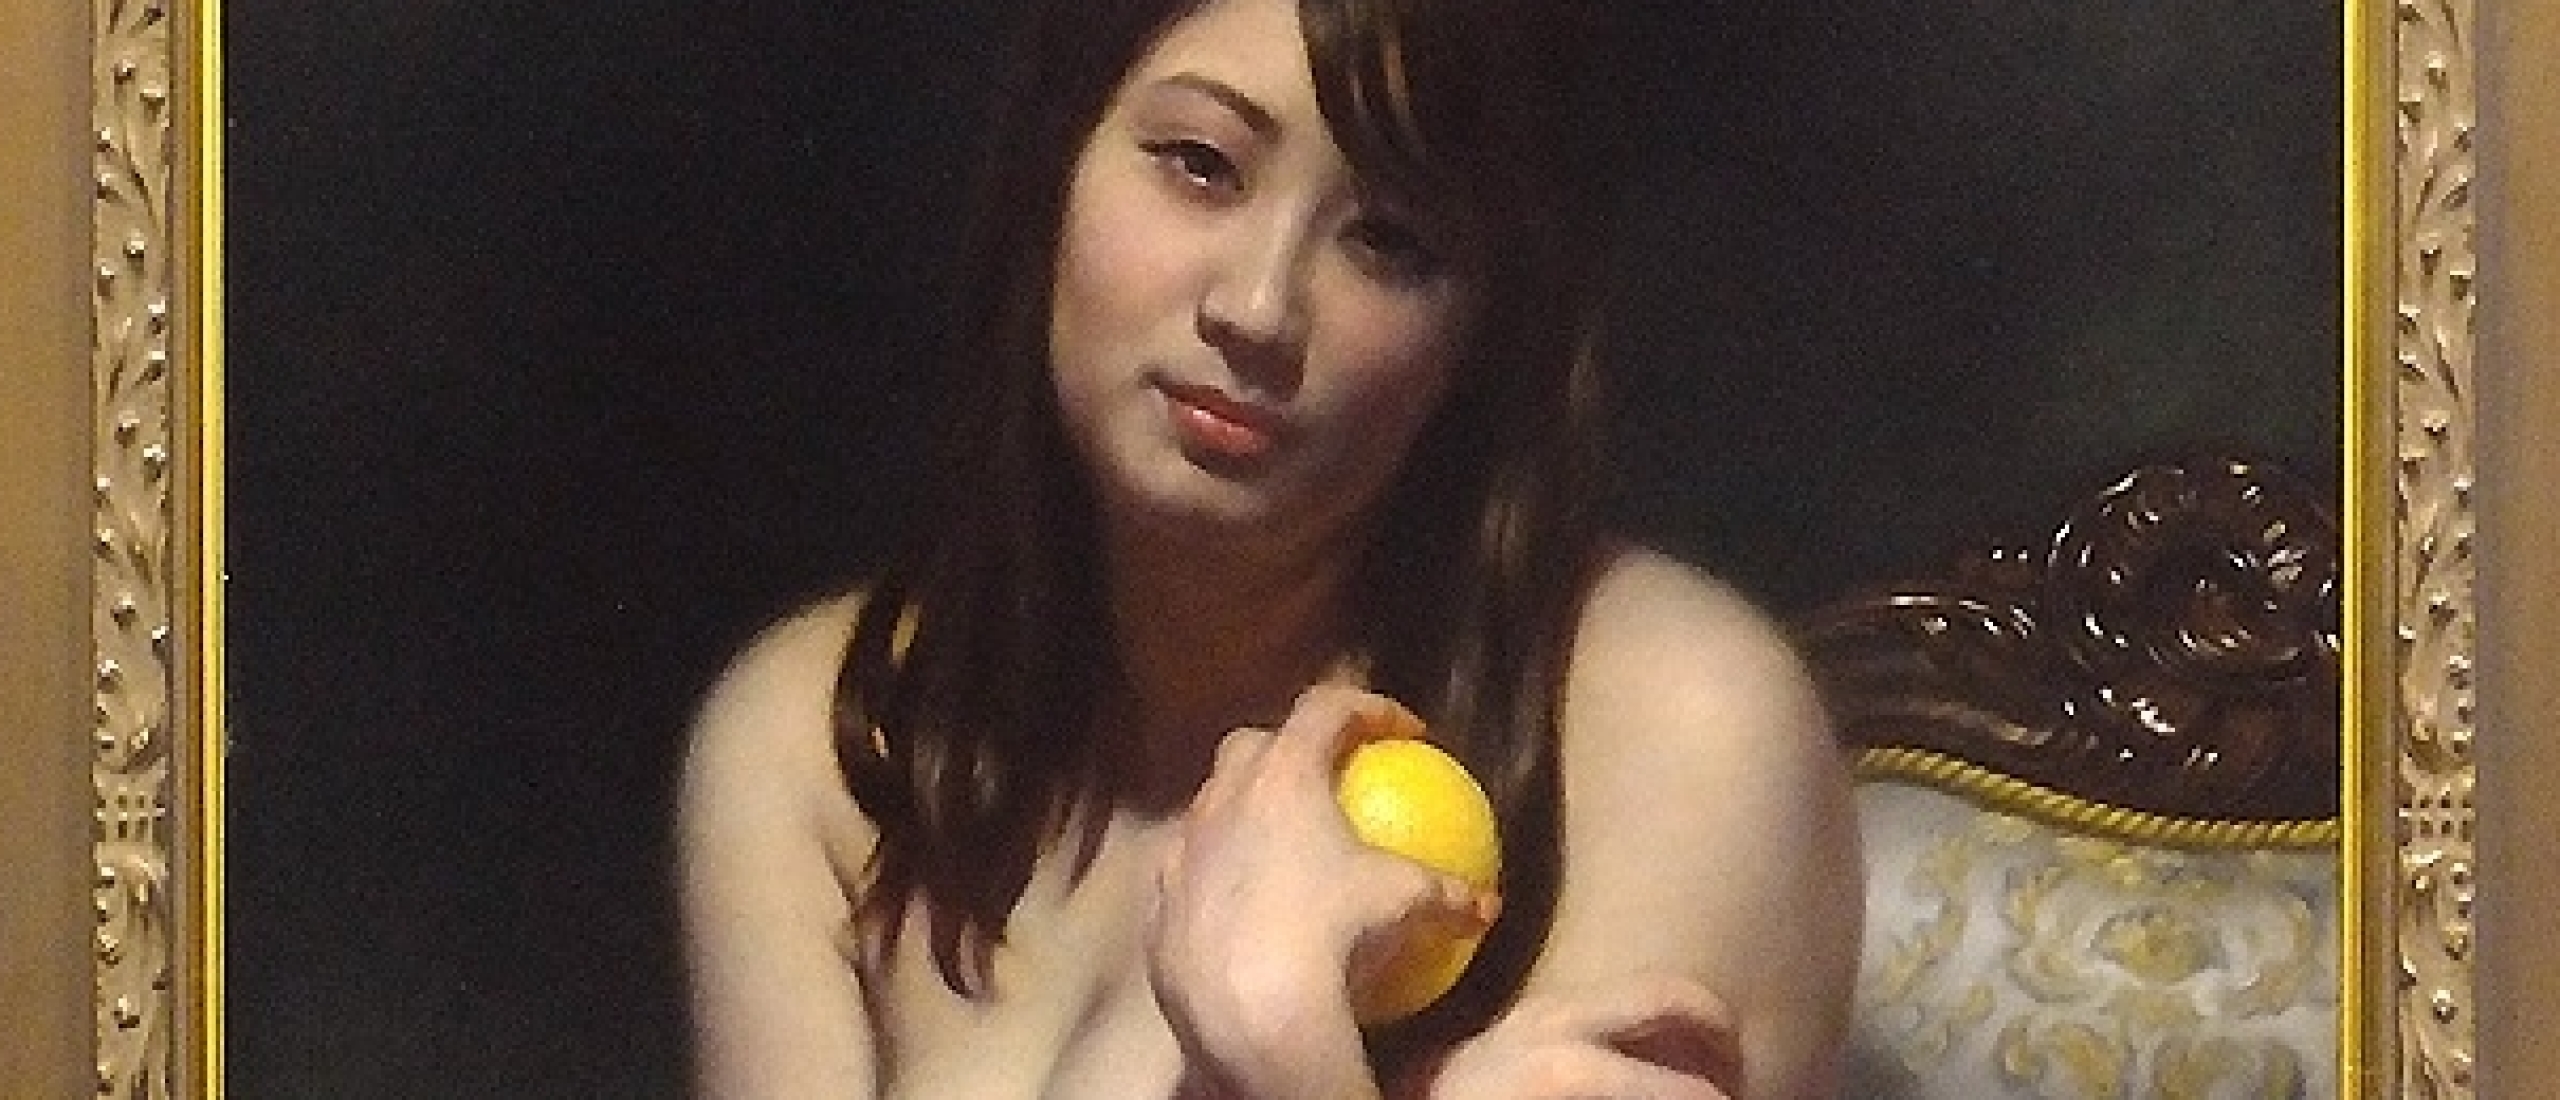 tetsuya mishima semi nude holding a lemon